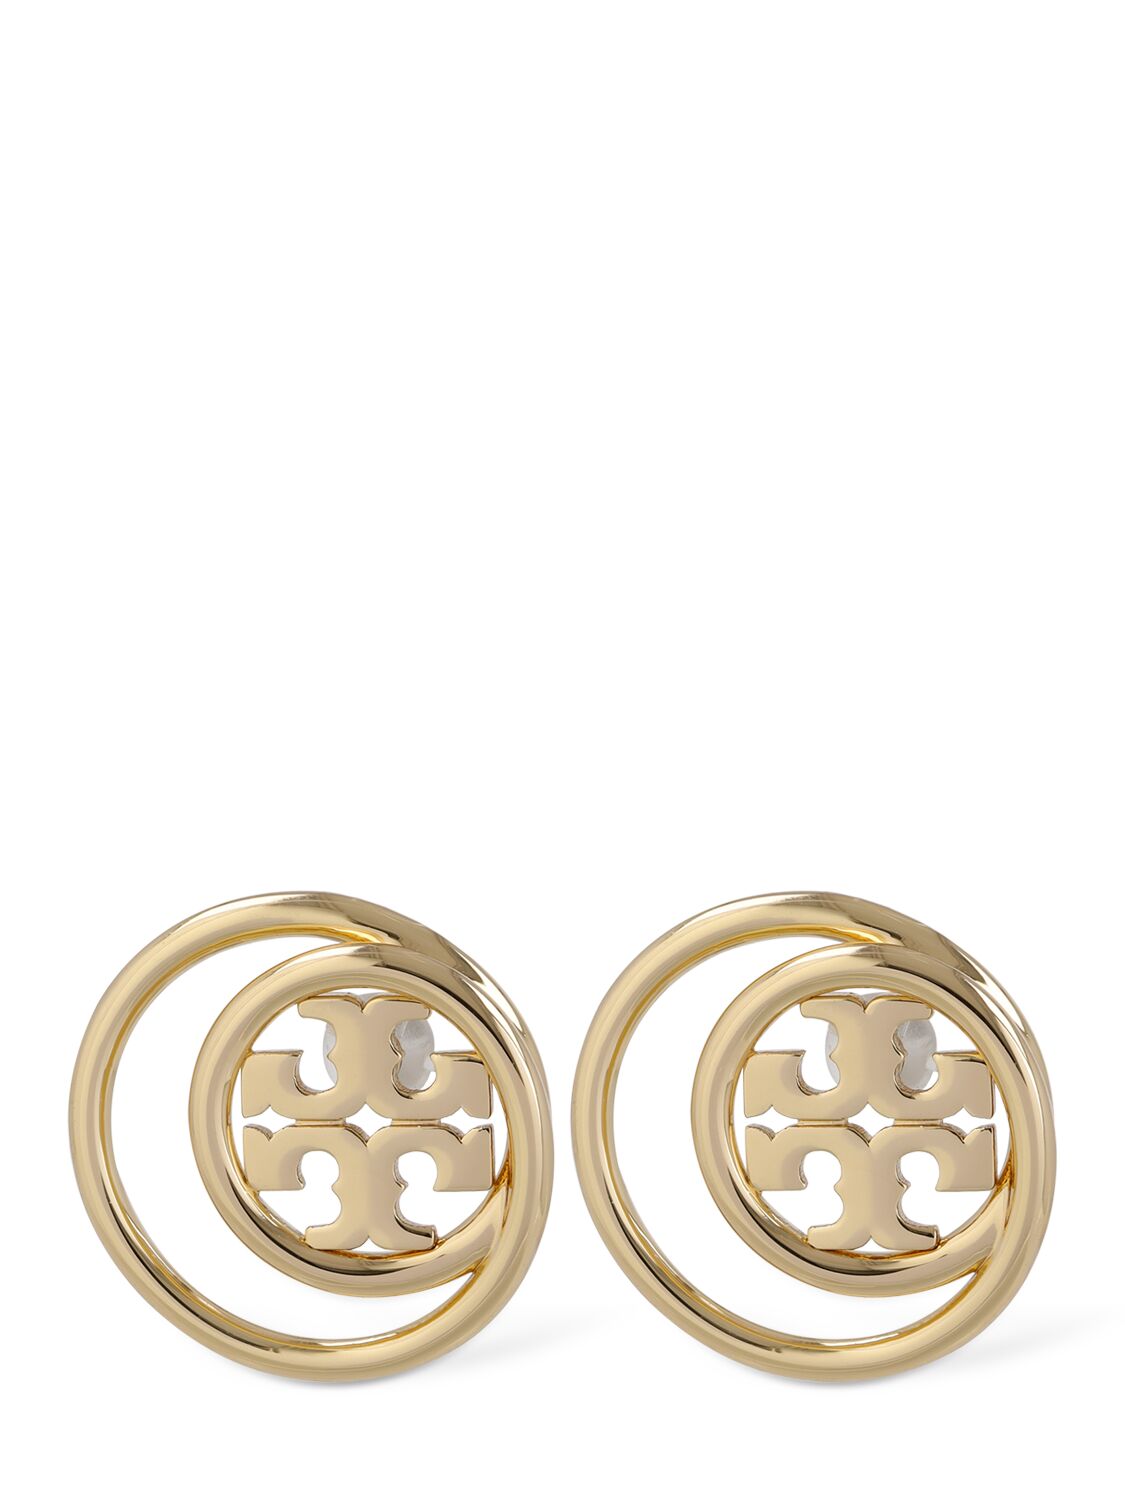 Image of Miller Double Ring Stud Earrings